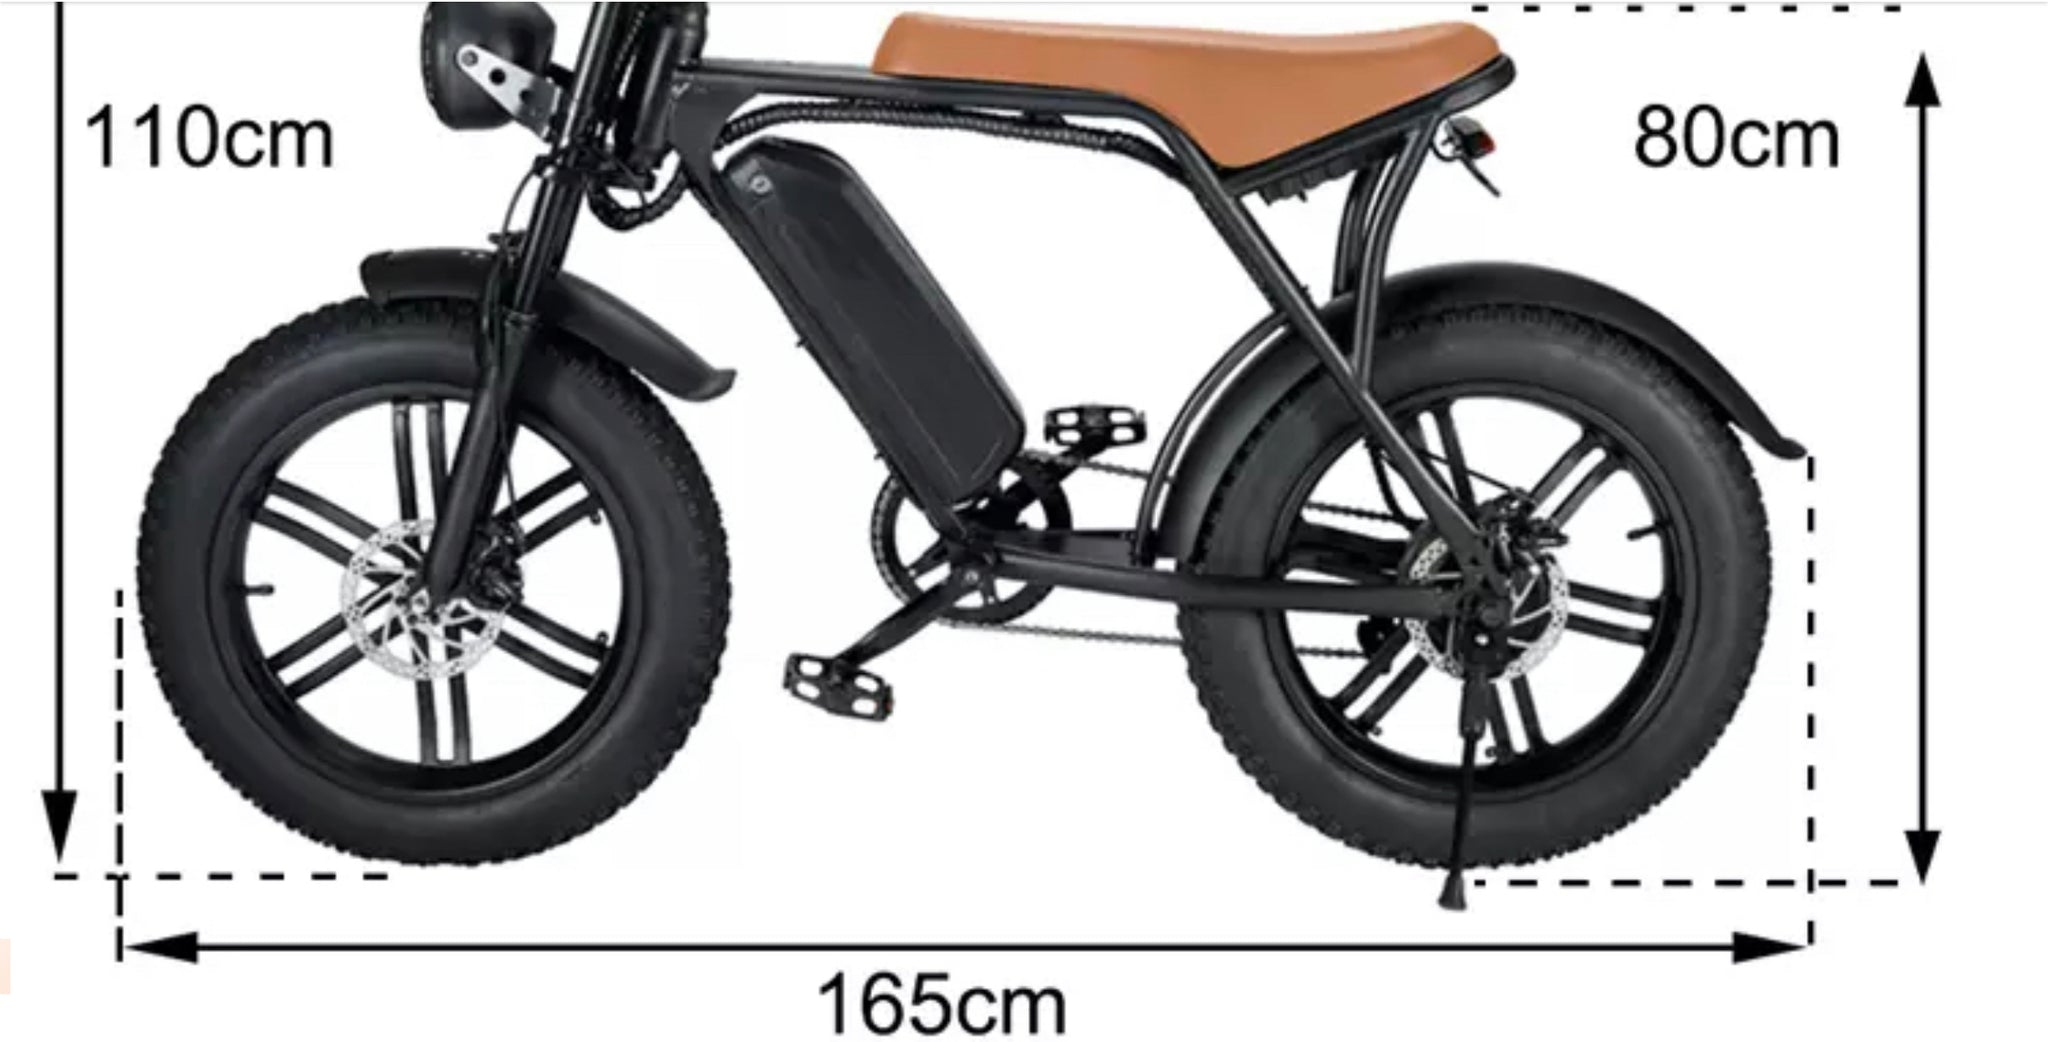 “Nitro” Electric Bike All Terrain 20*4.0 Fat Tires